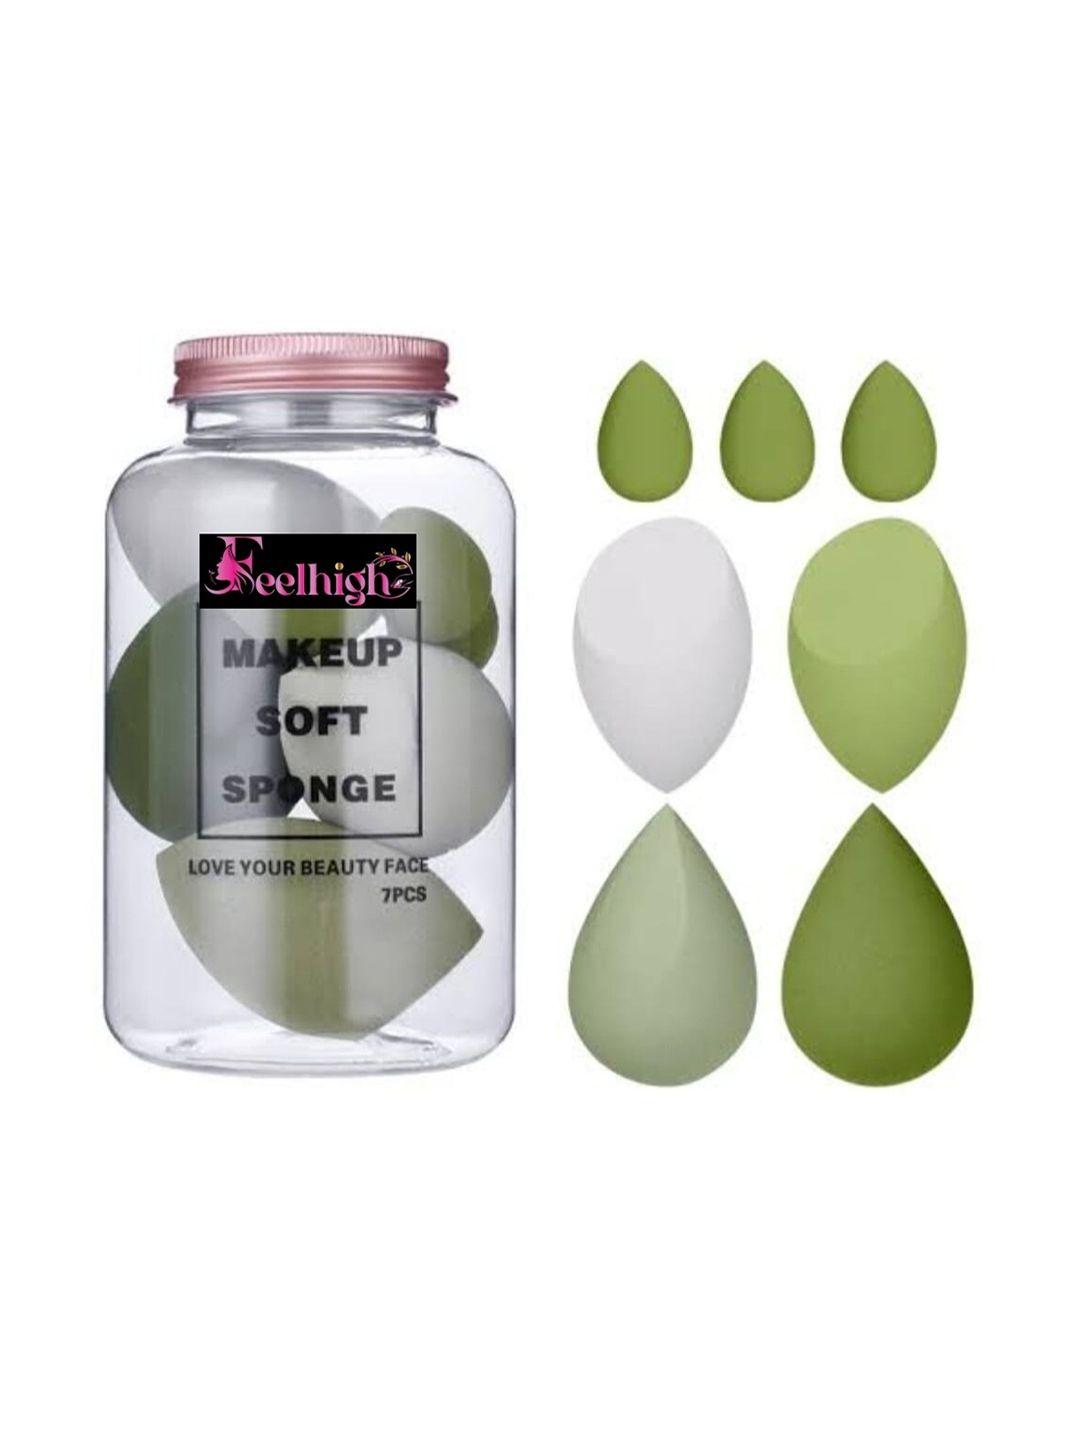 feelhigh set of 7 beauty blenders makeup soft sponges with storage jar - green & white